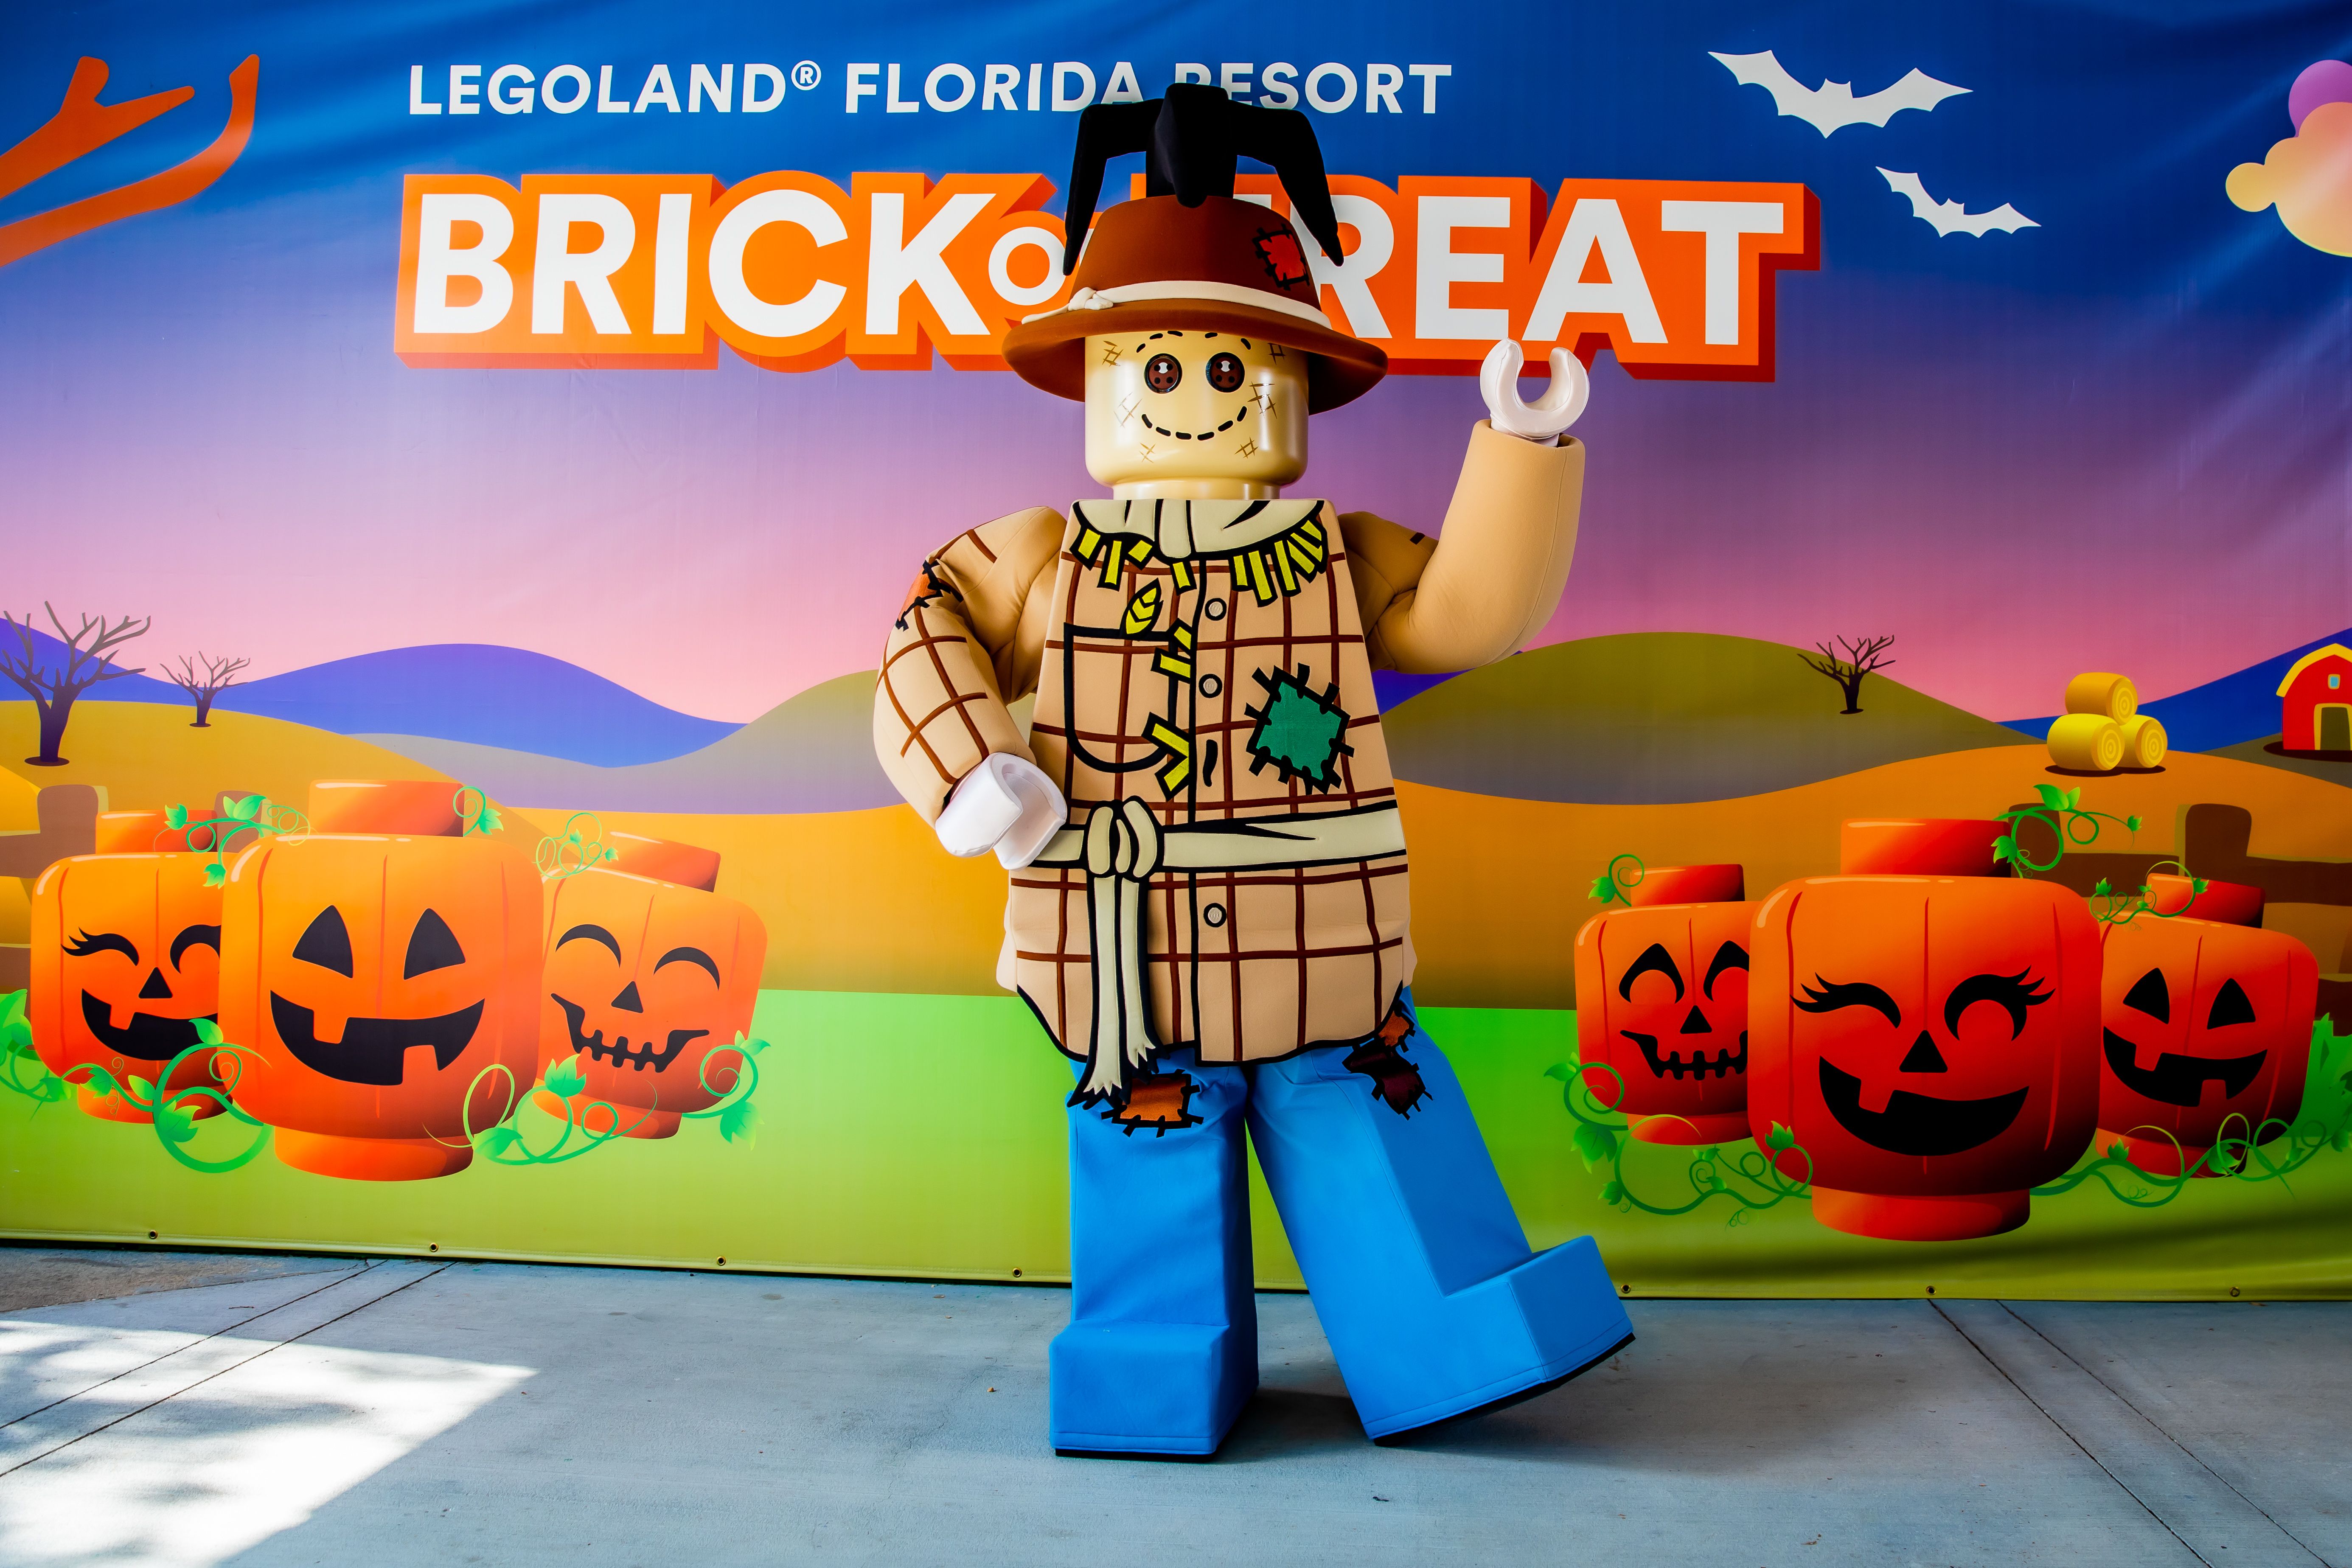 Lego Sammelstein Sonderstein Legoland Florida Promo brick neu Brick or Treat